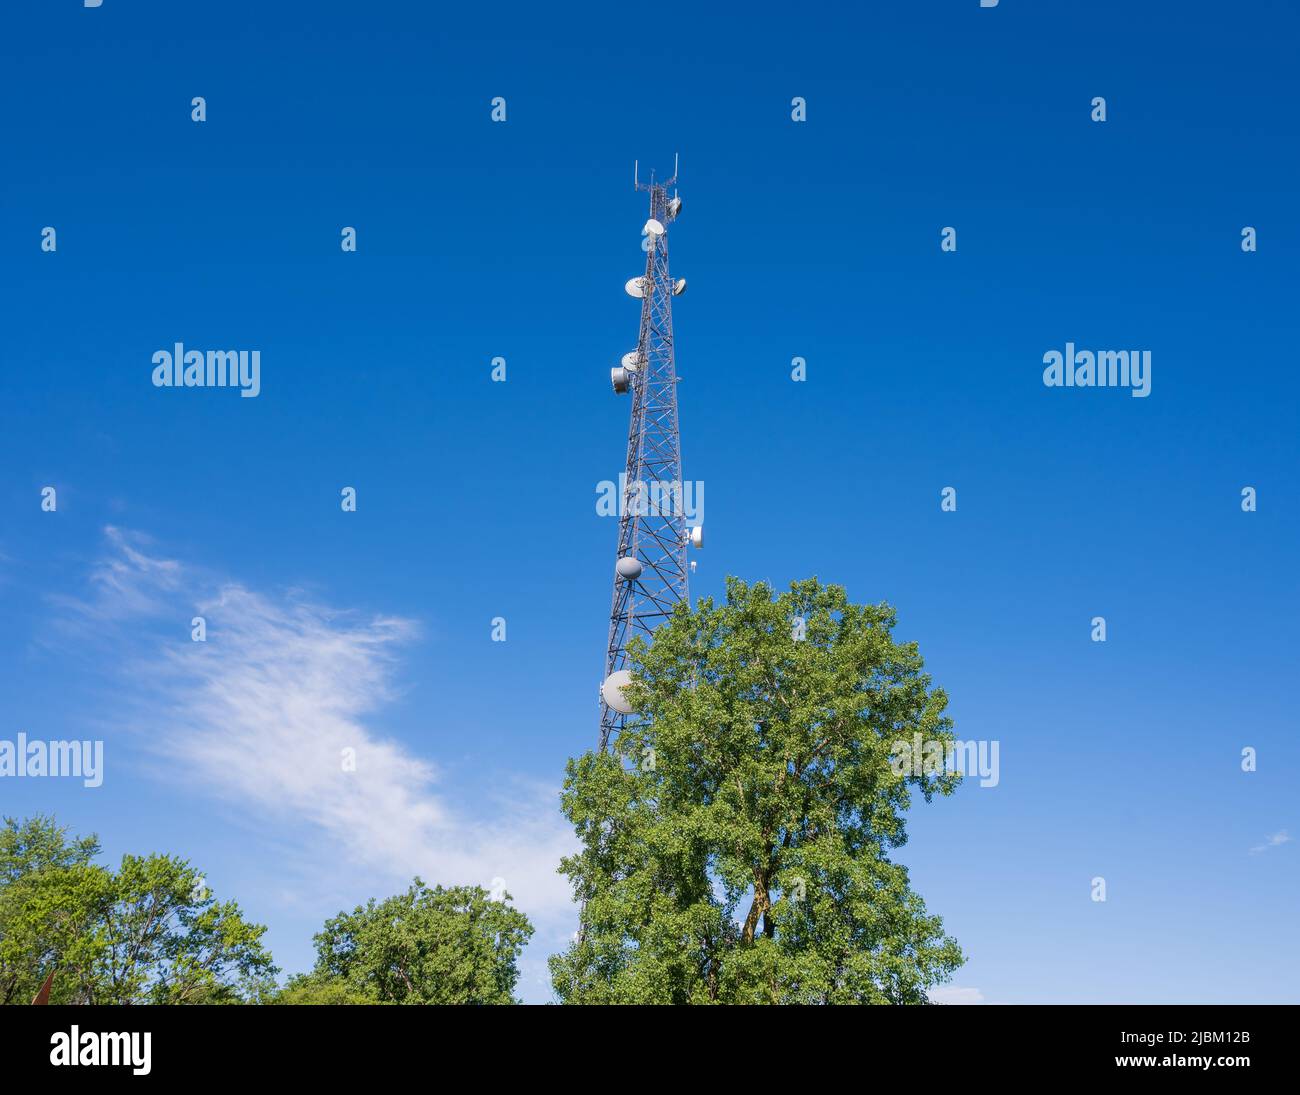 Dimondale MI - June 4, 2022: Michigan State Police communication tower Stock Photo